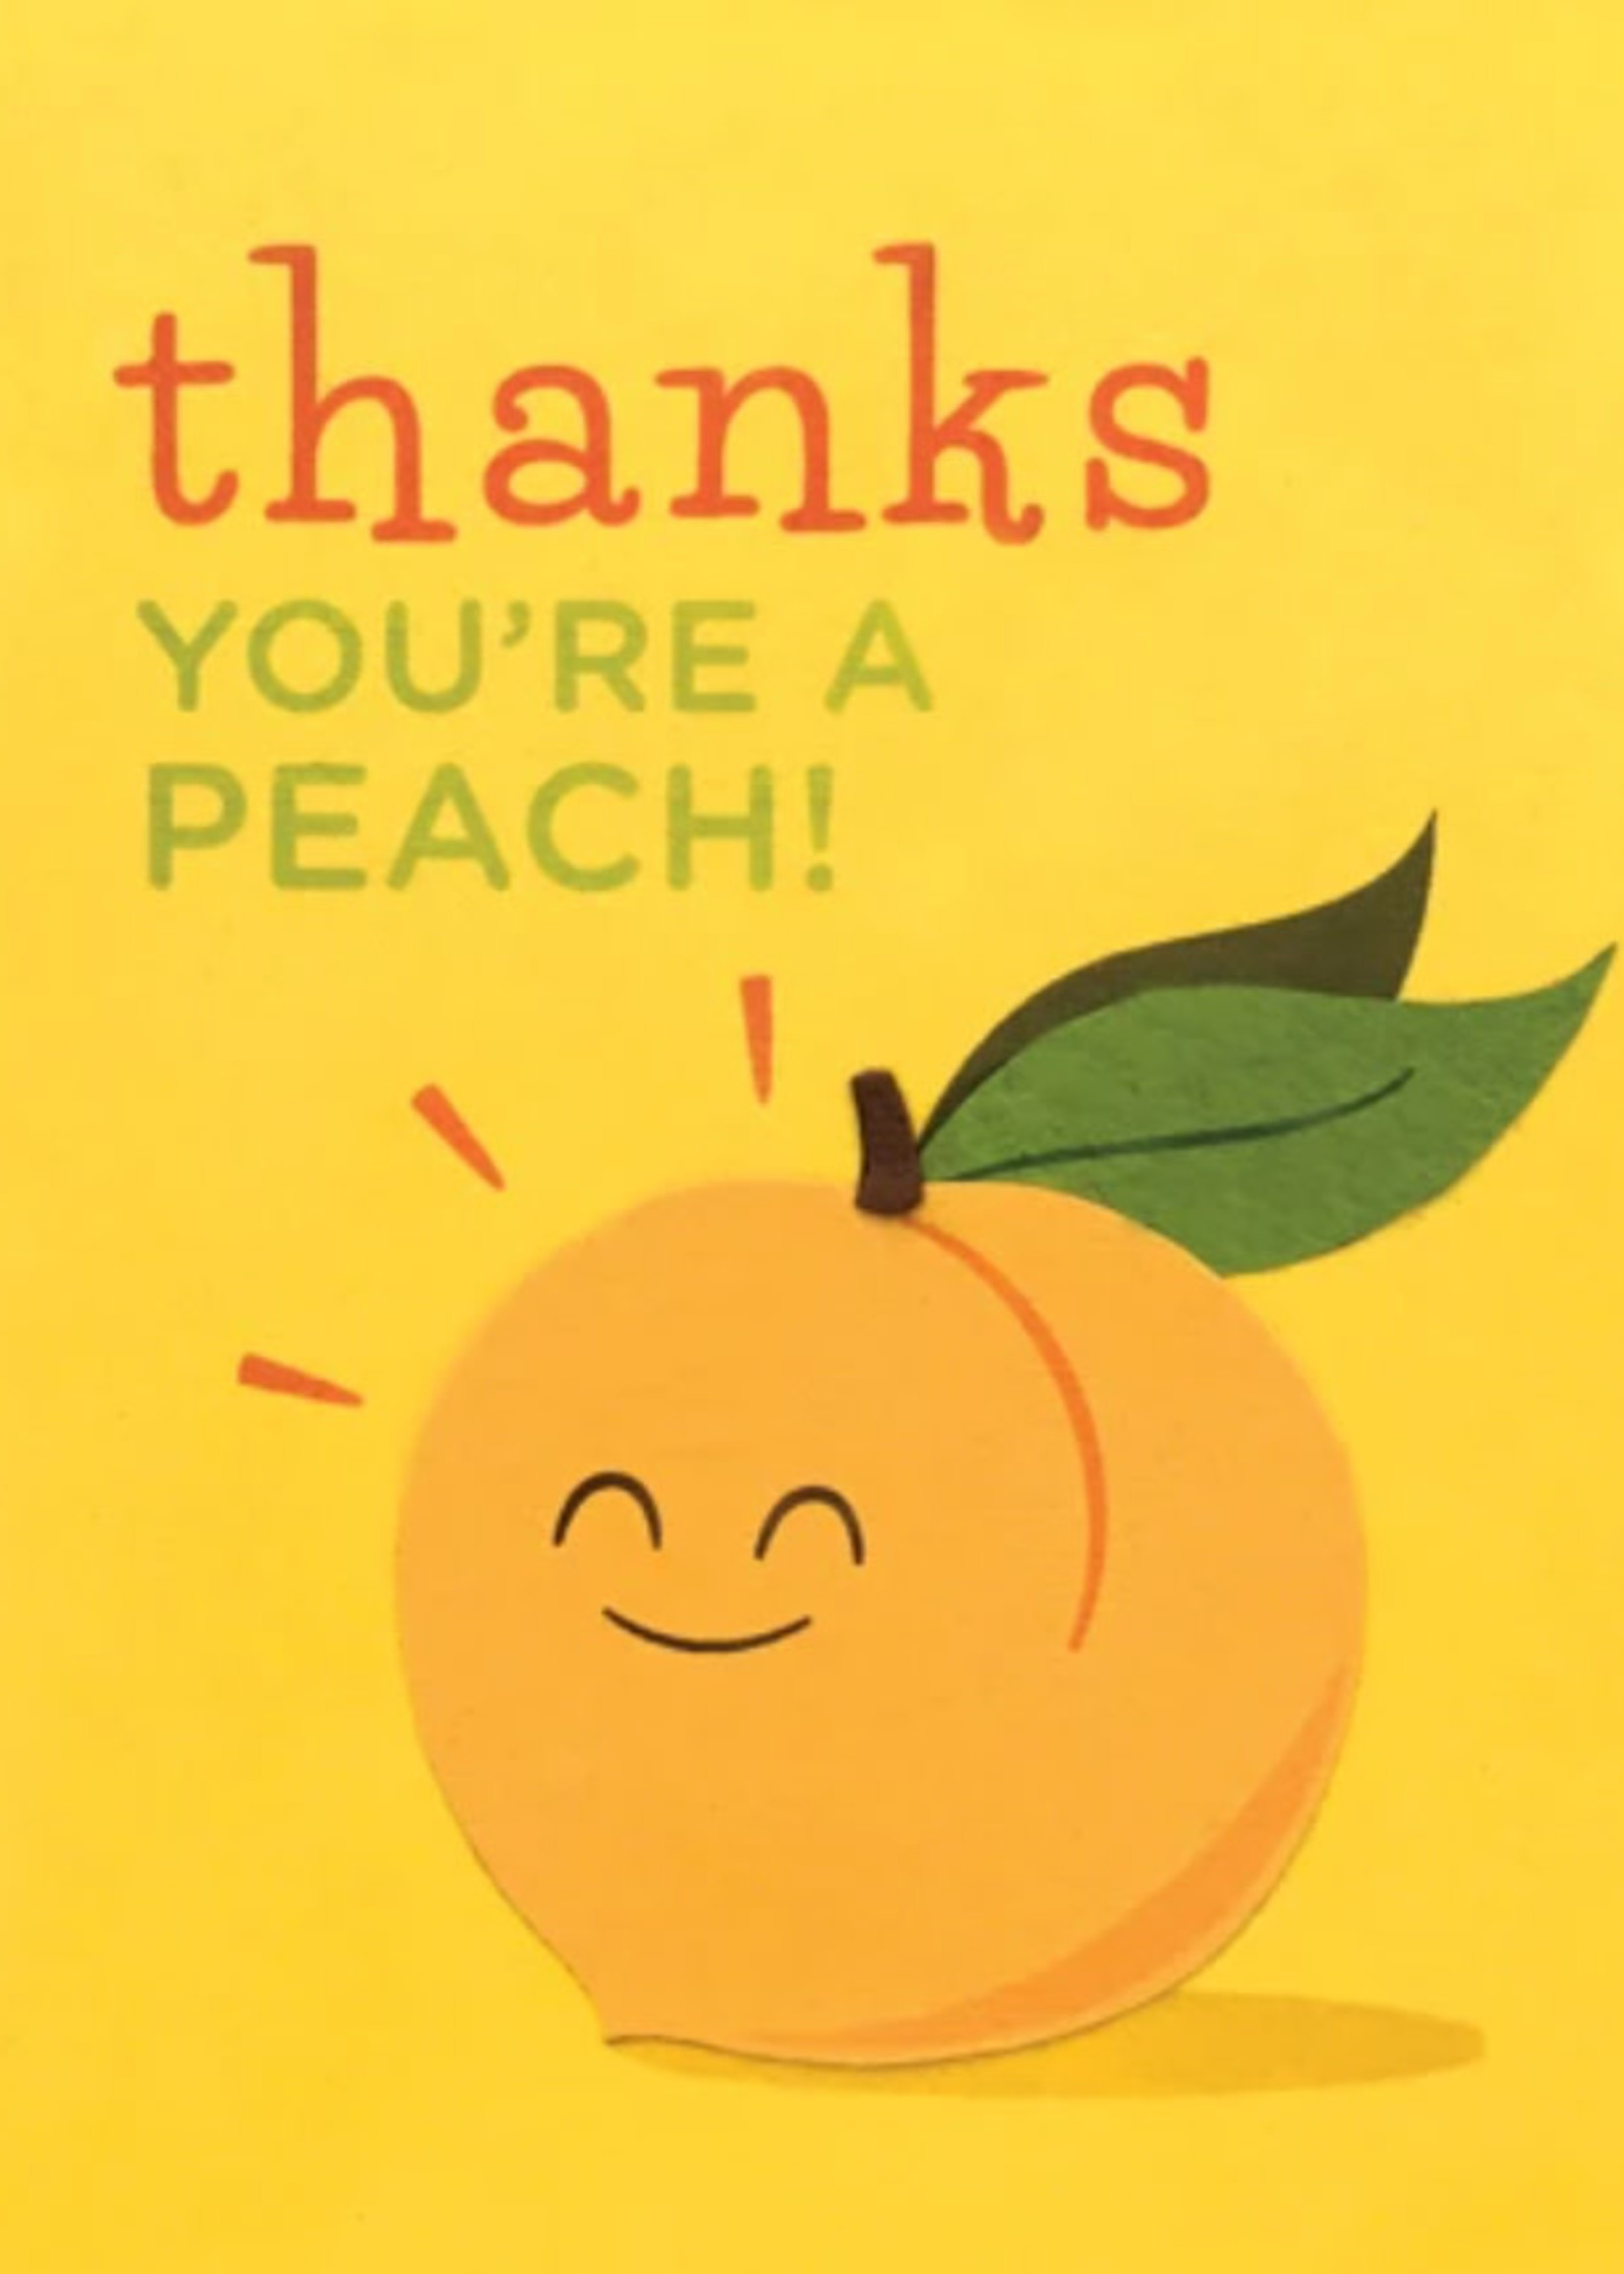 Good Paper Thanks You’re A Peach